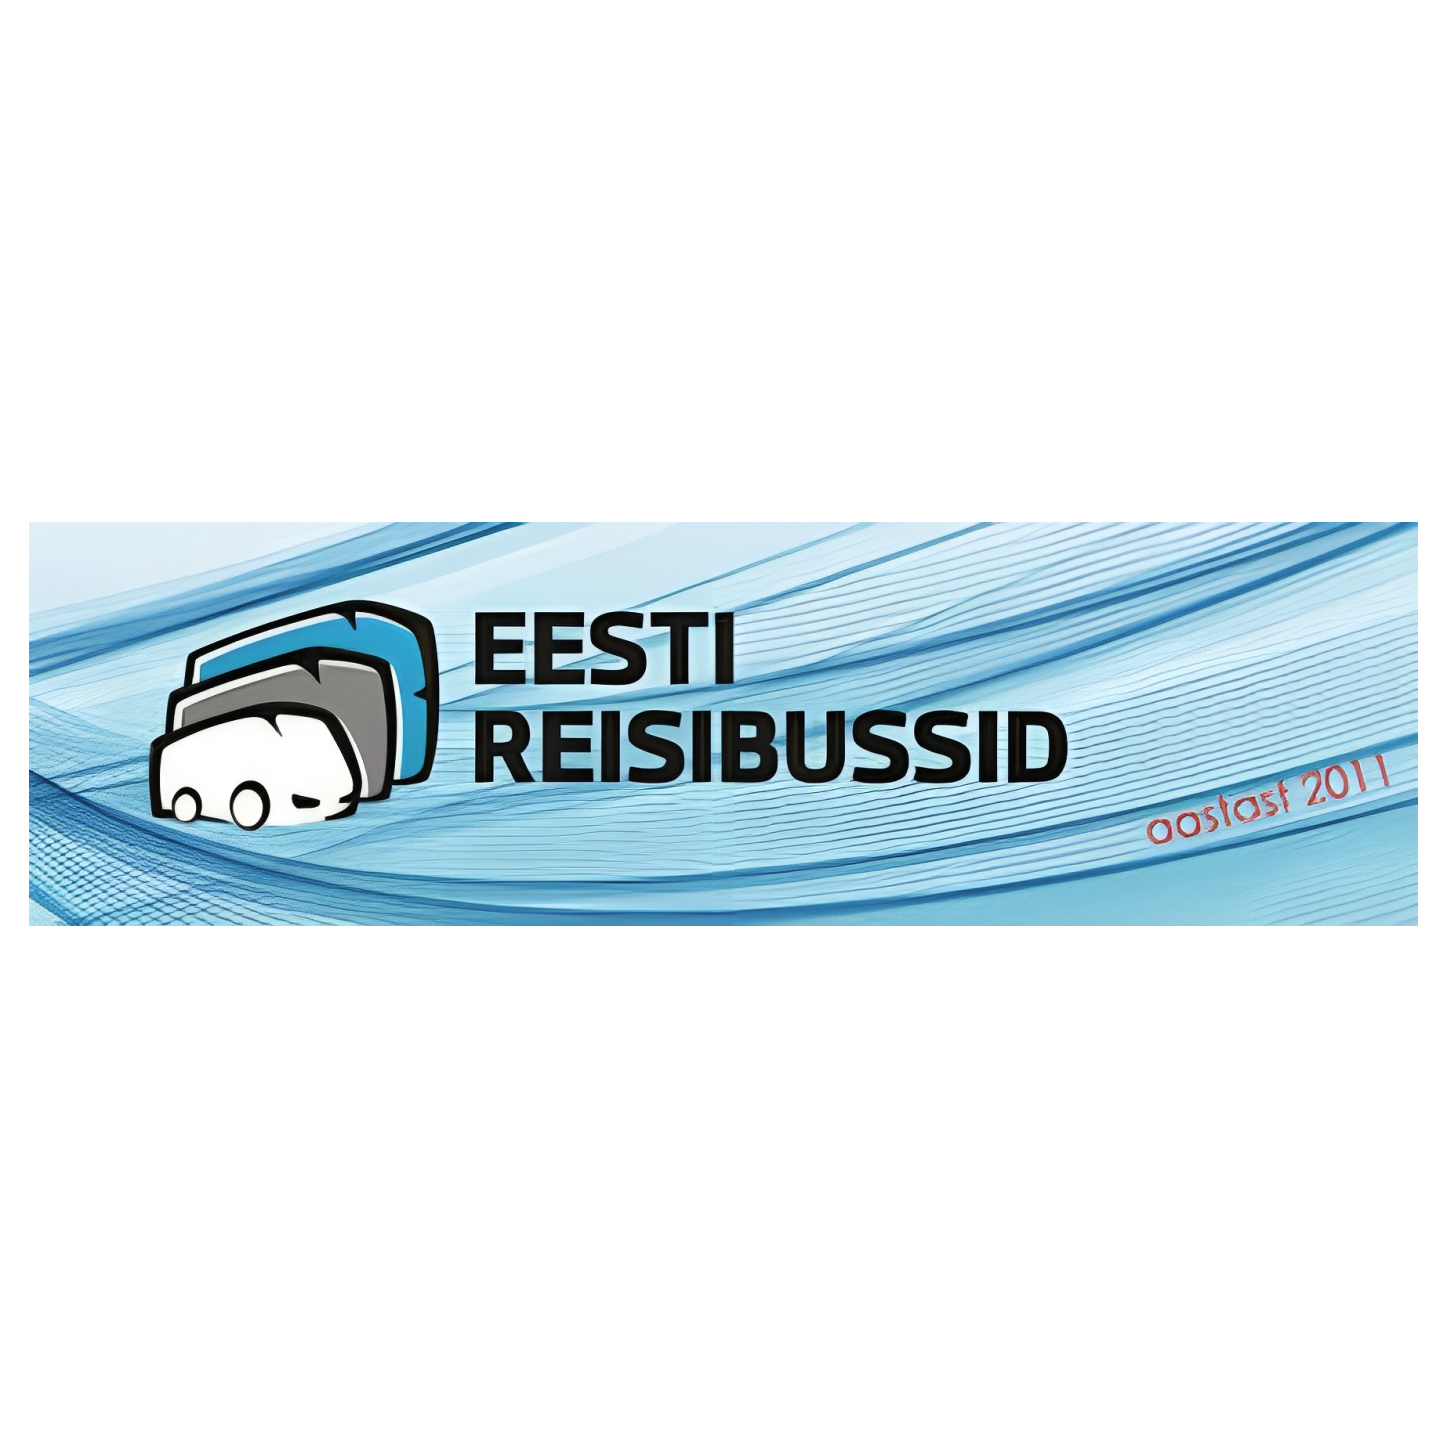 EESTI REISIBUSSID MTÜ logo